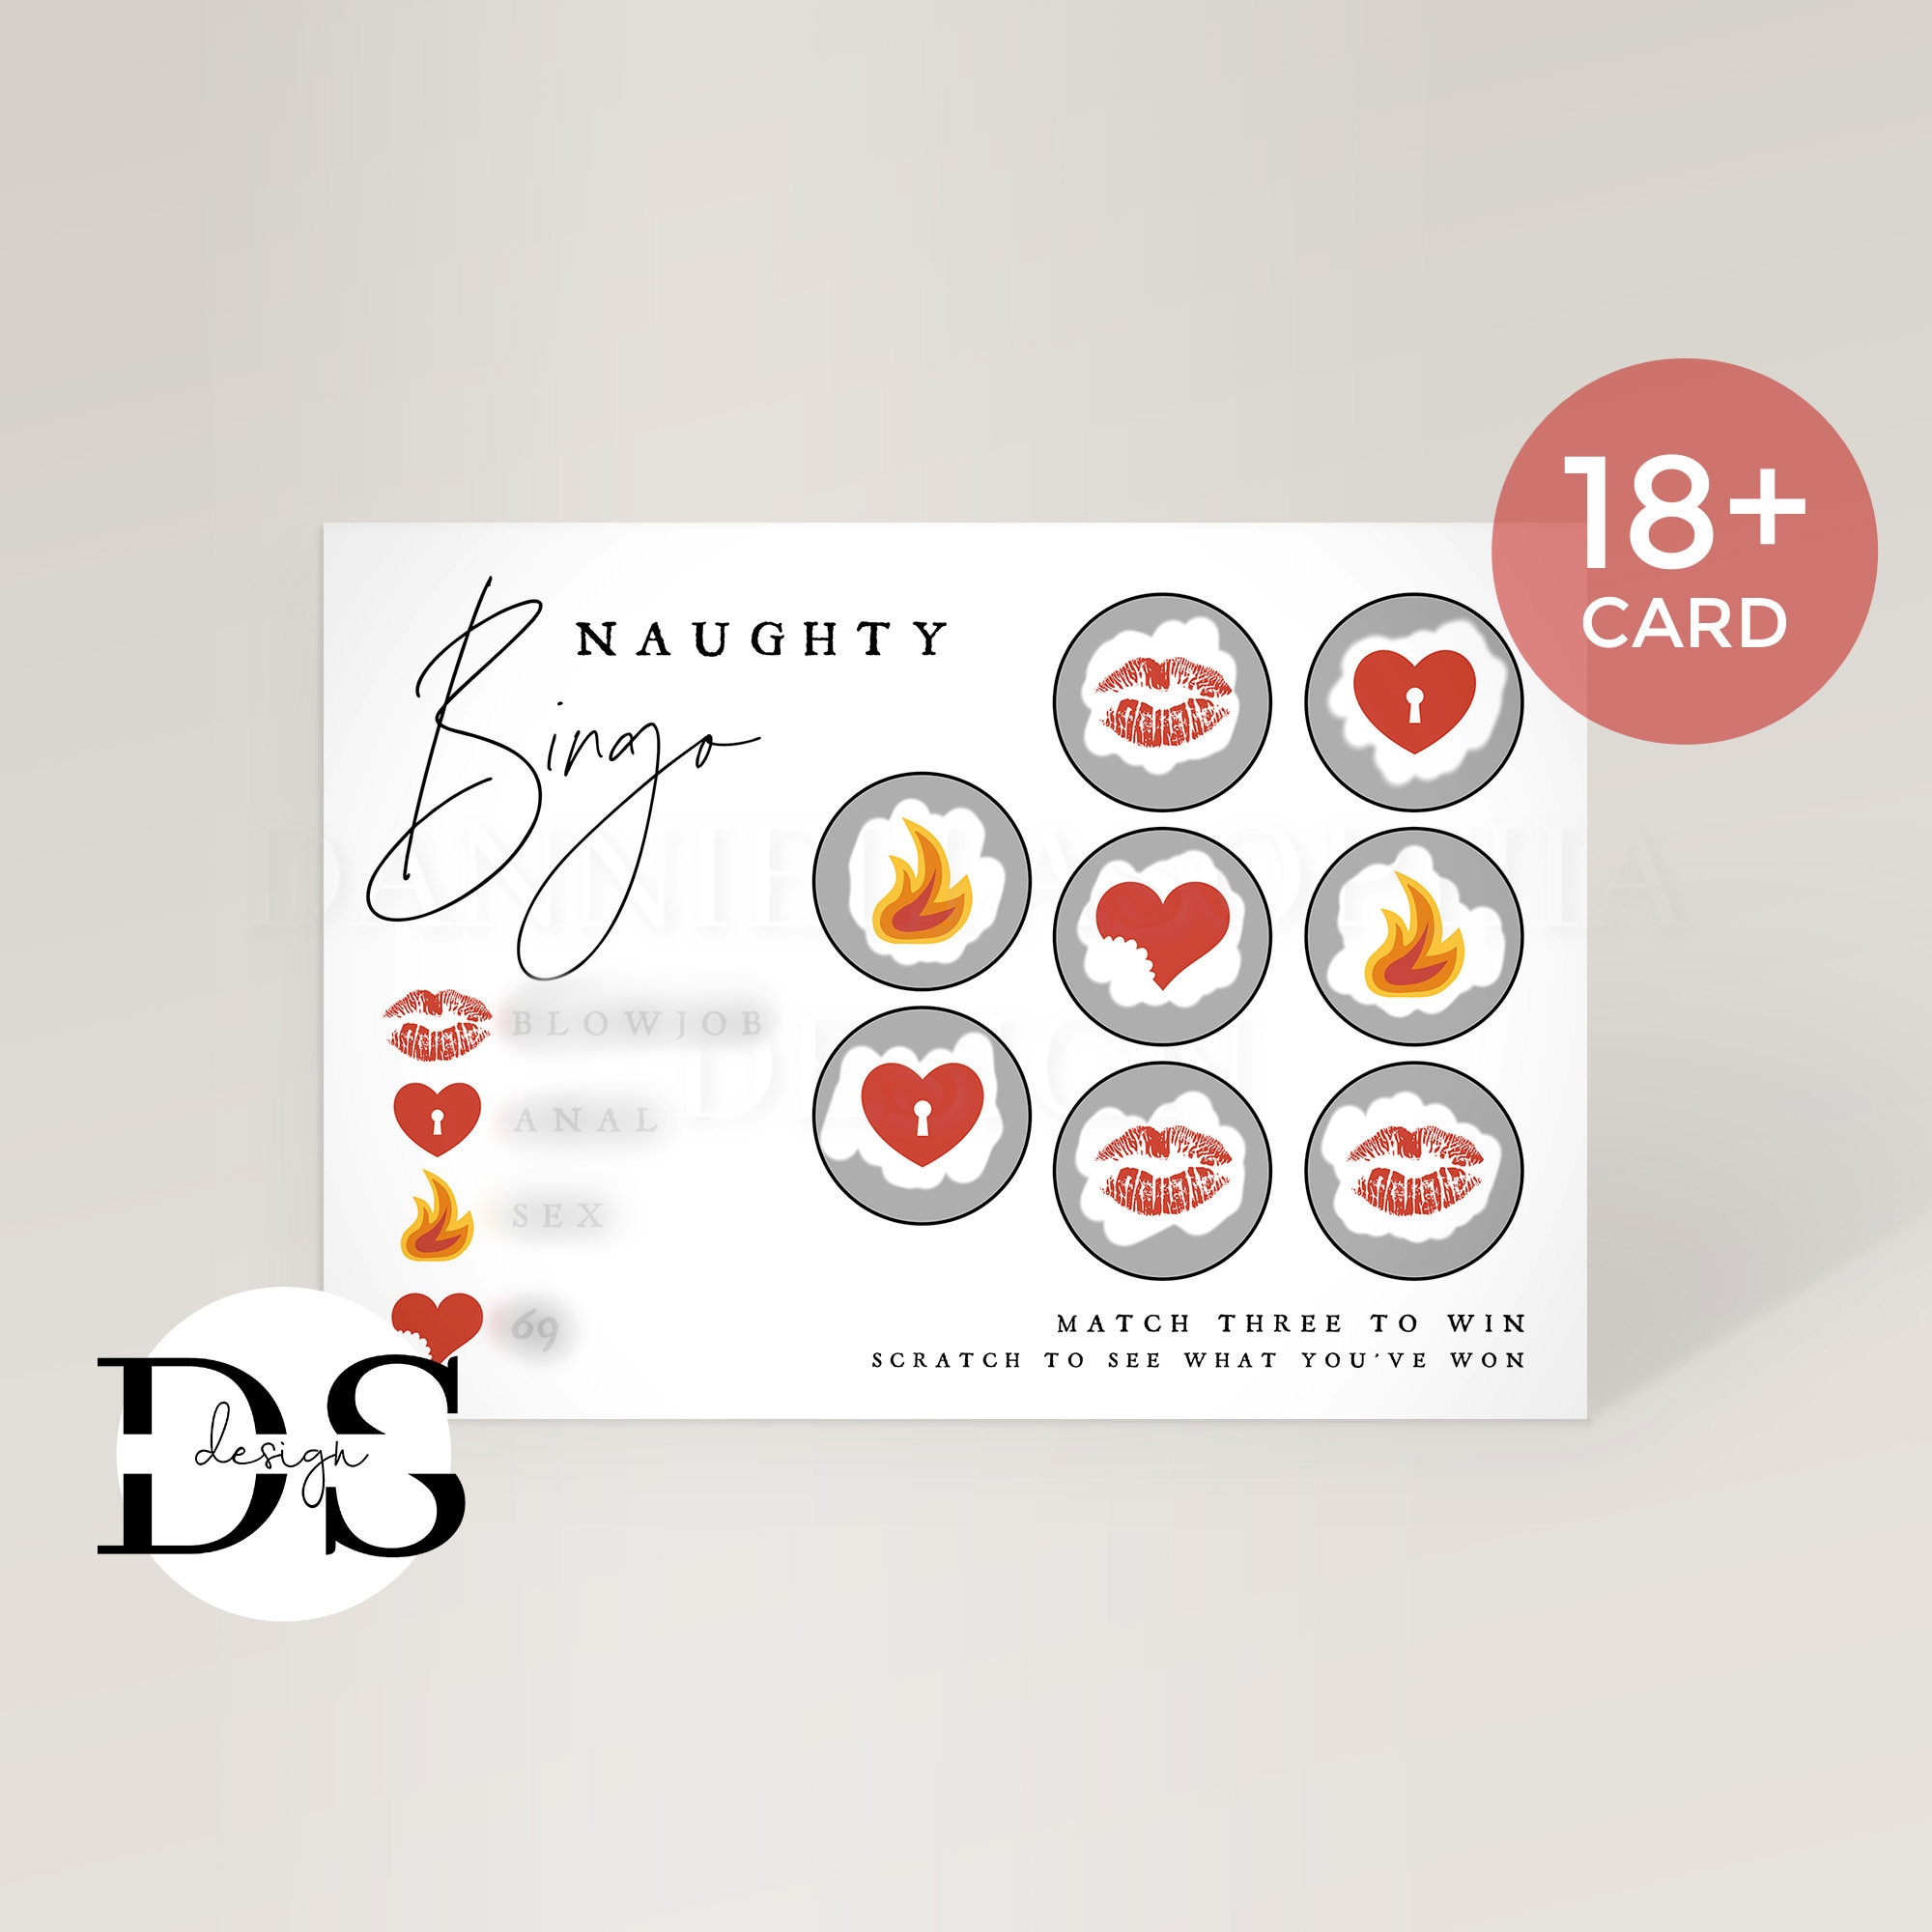 Naughty Scratch Card Naughty Bingo Anniversary Card photo